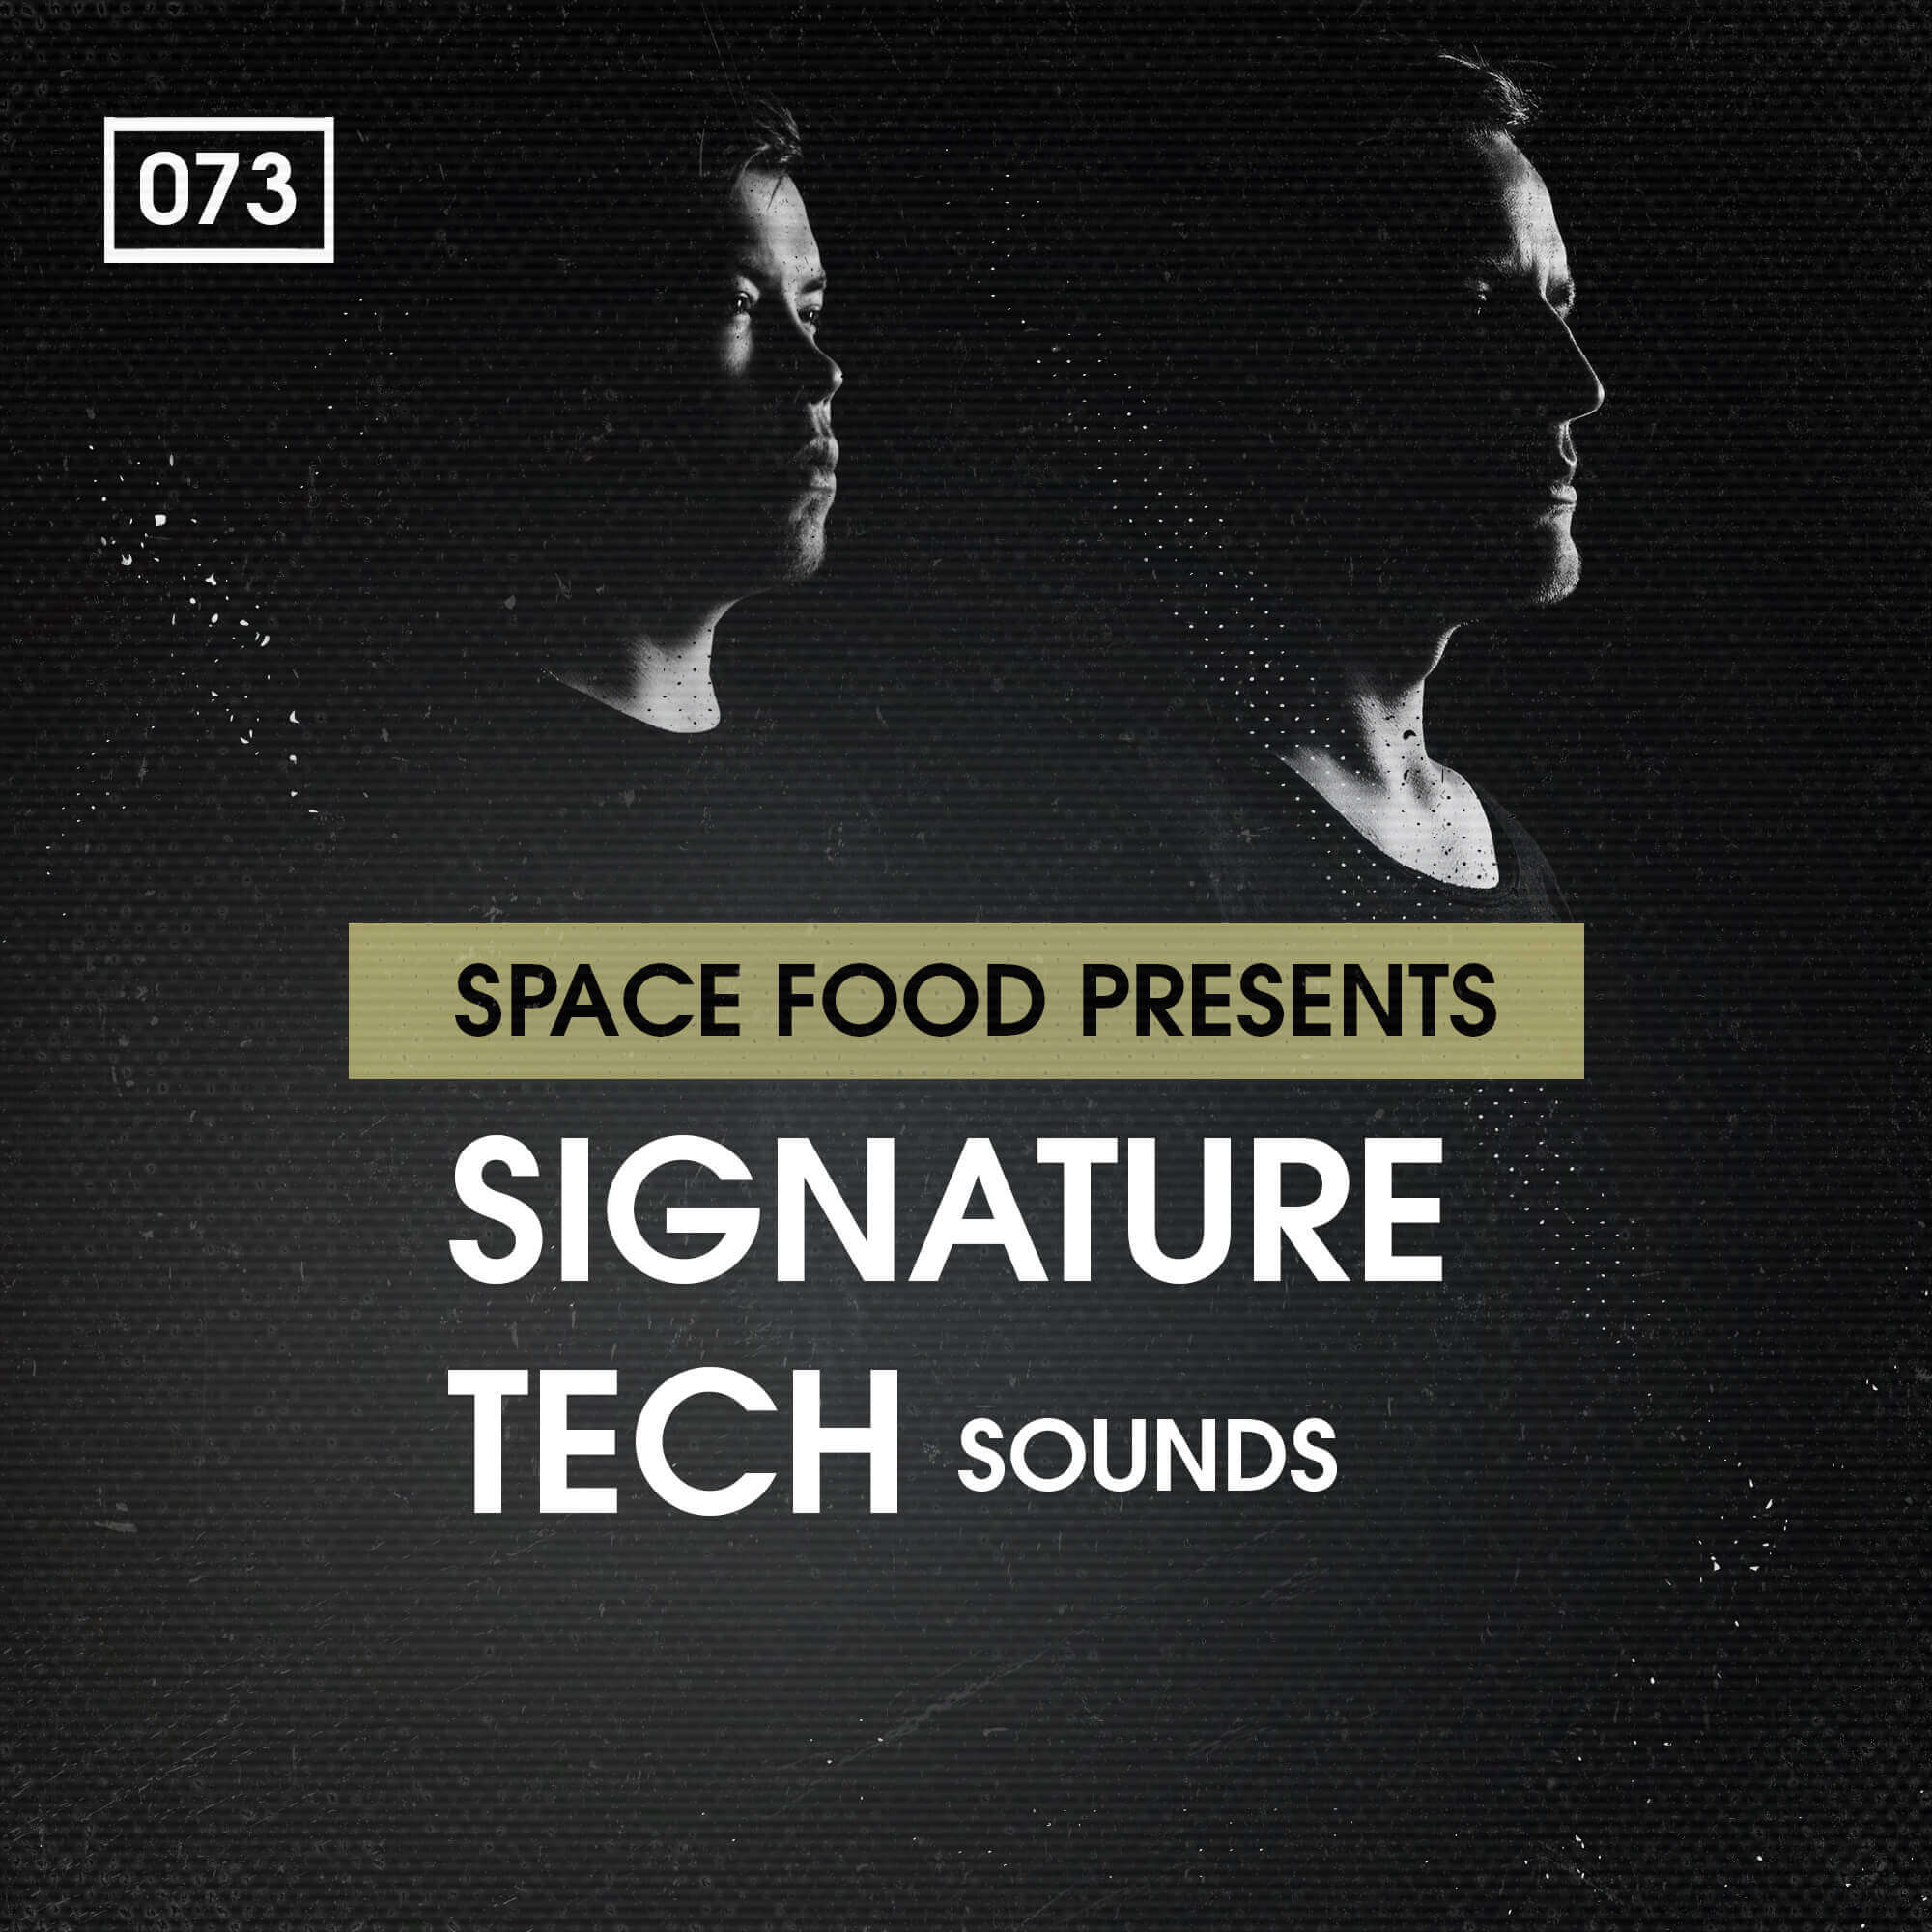 Space-Food-Presents-Signature-Tech-Sounds-1.jpg